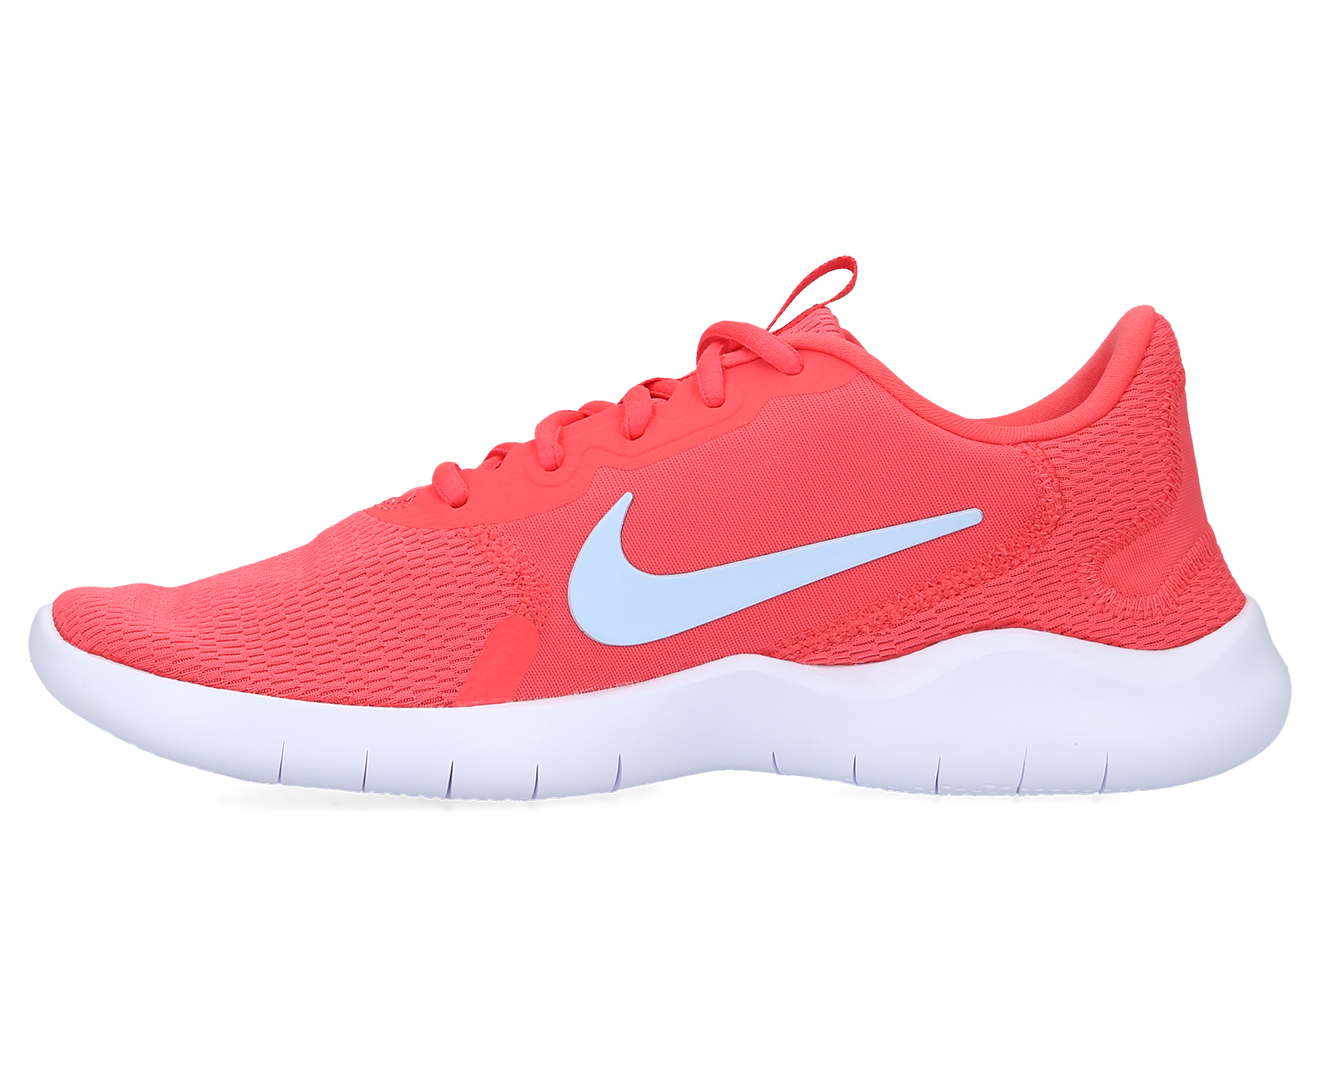 Nike Women's Flex Experience RN 9 Running Shoes - Ember Glow/Hydrogen Blue | Catch.com.au